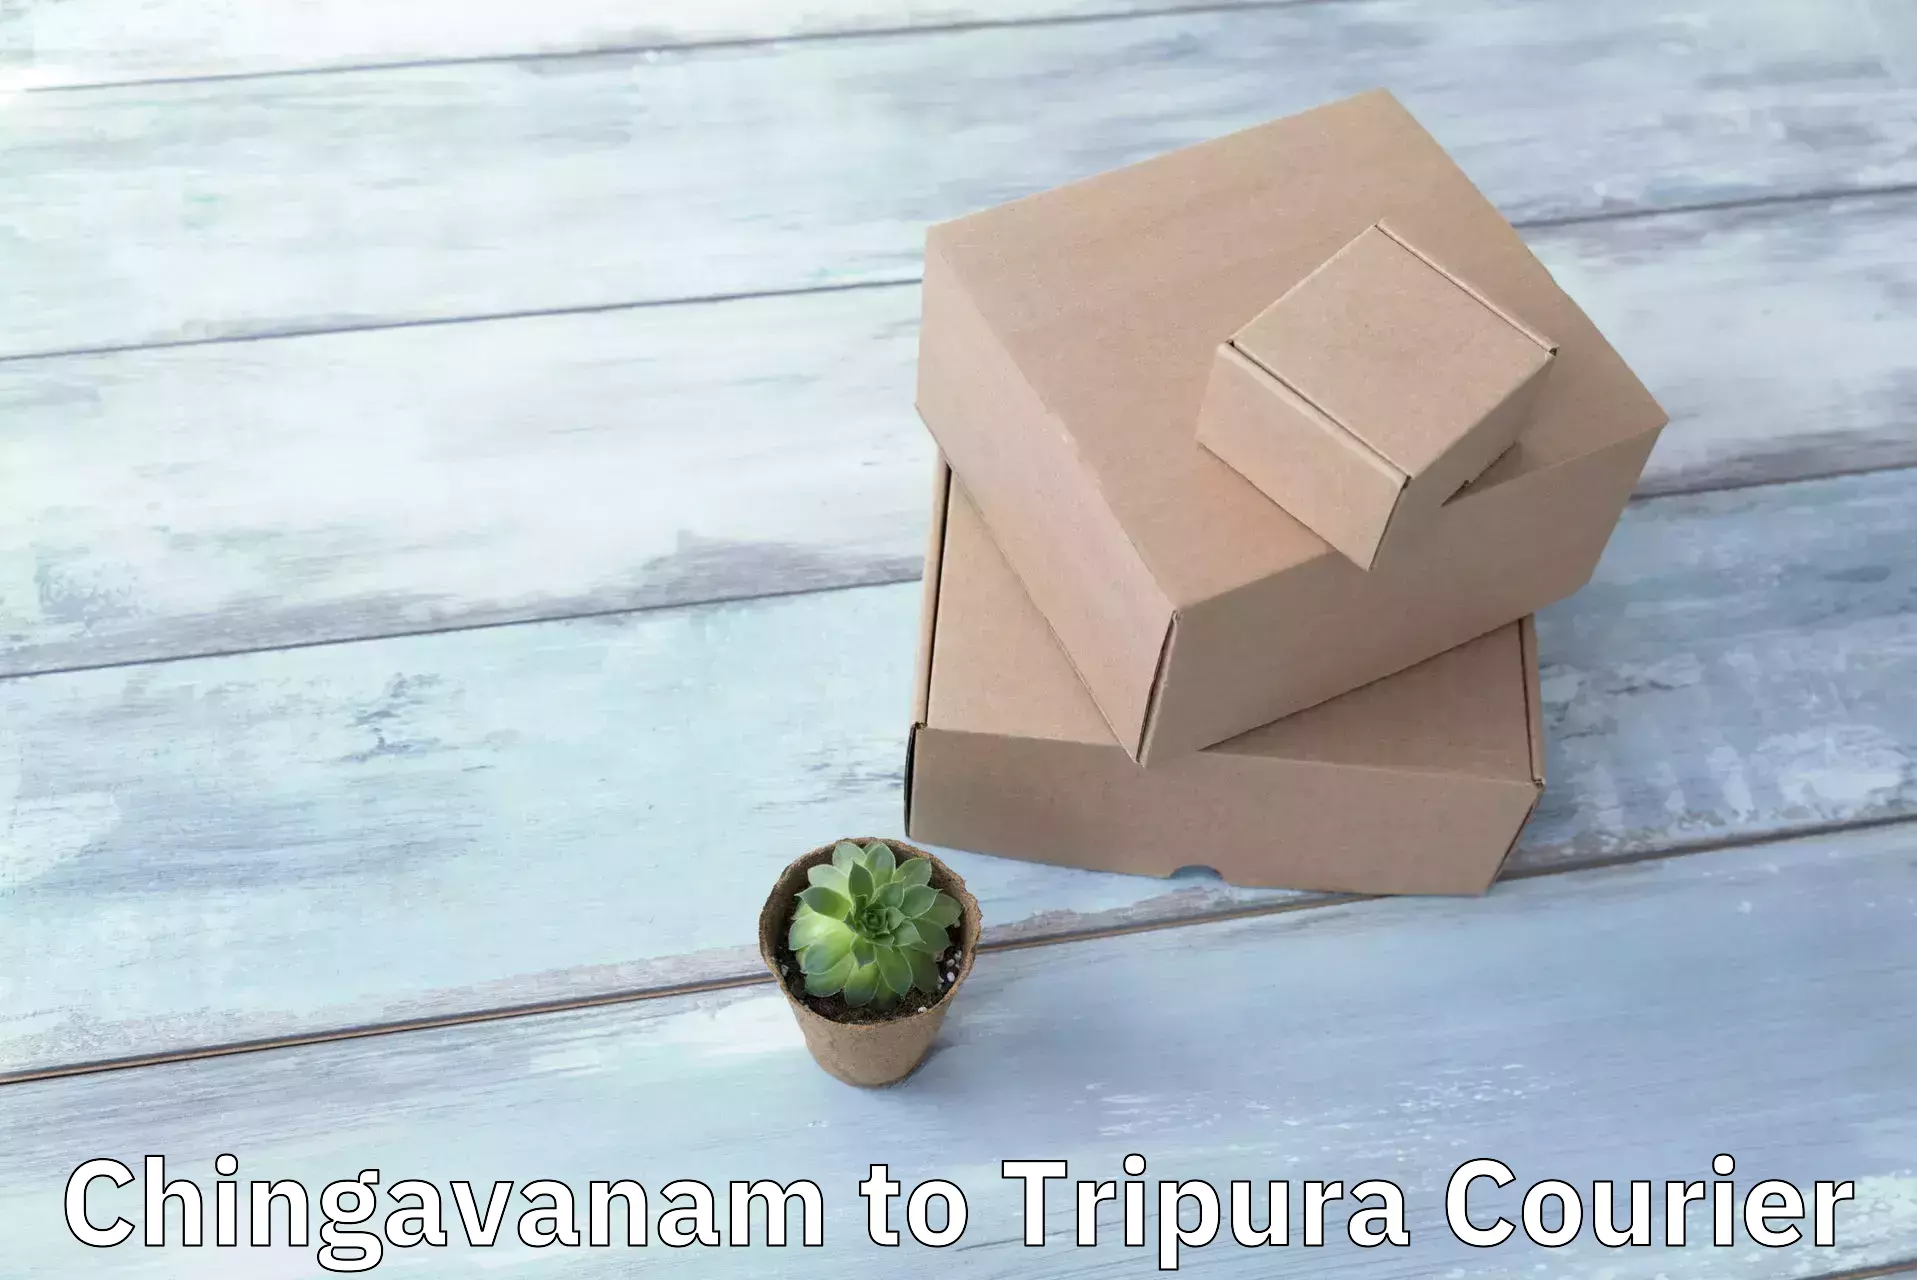 Courier service innovation Chingavanam to Tripura